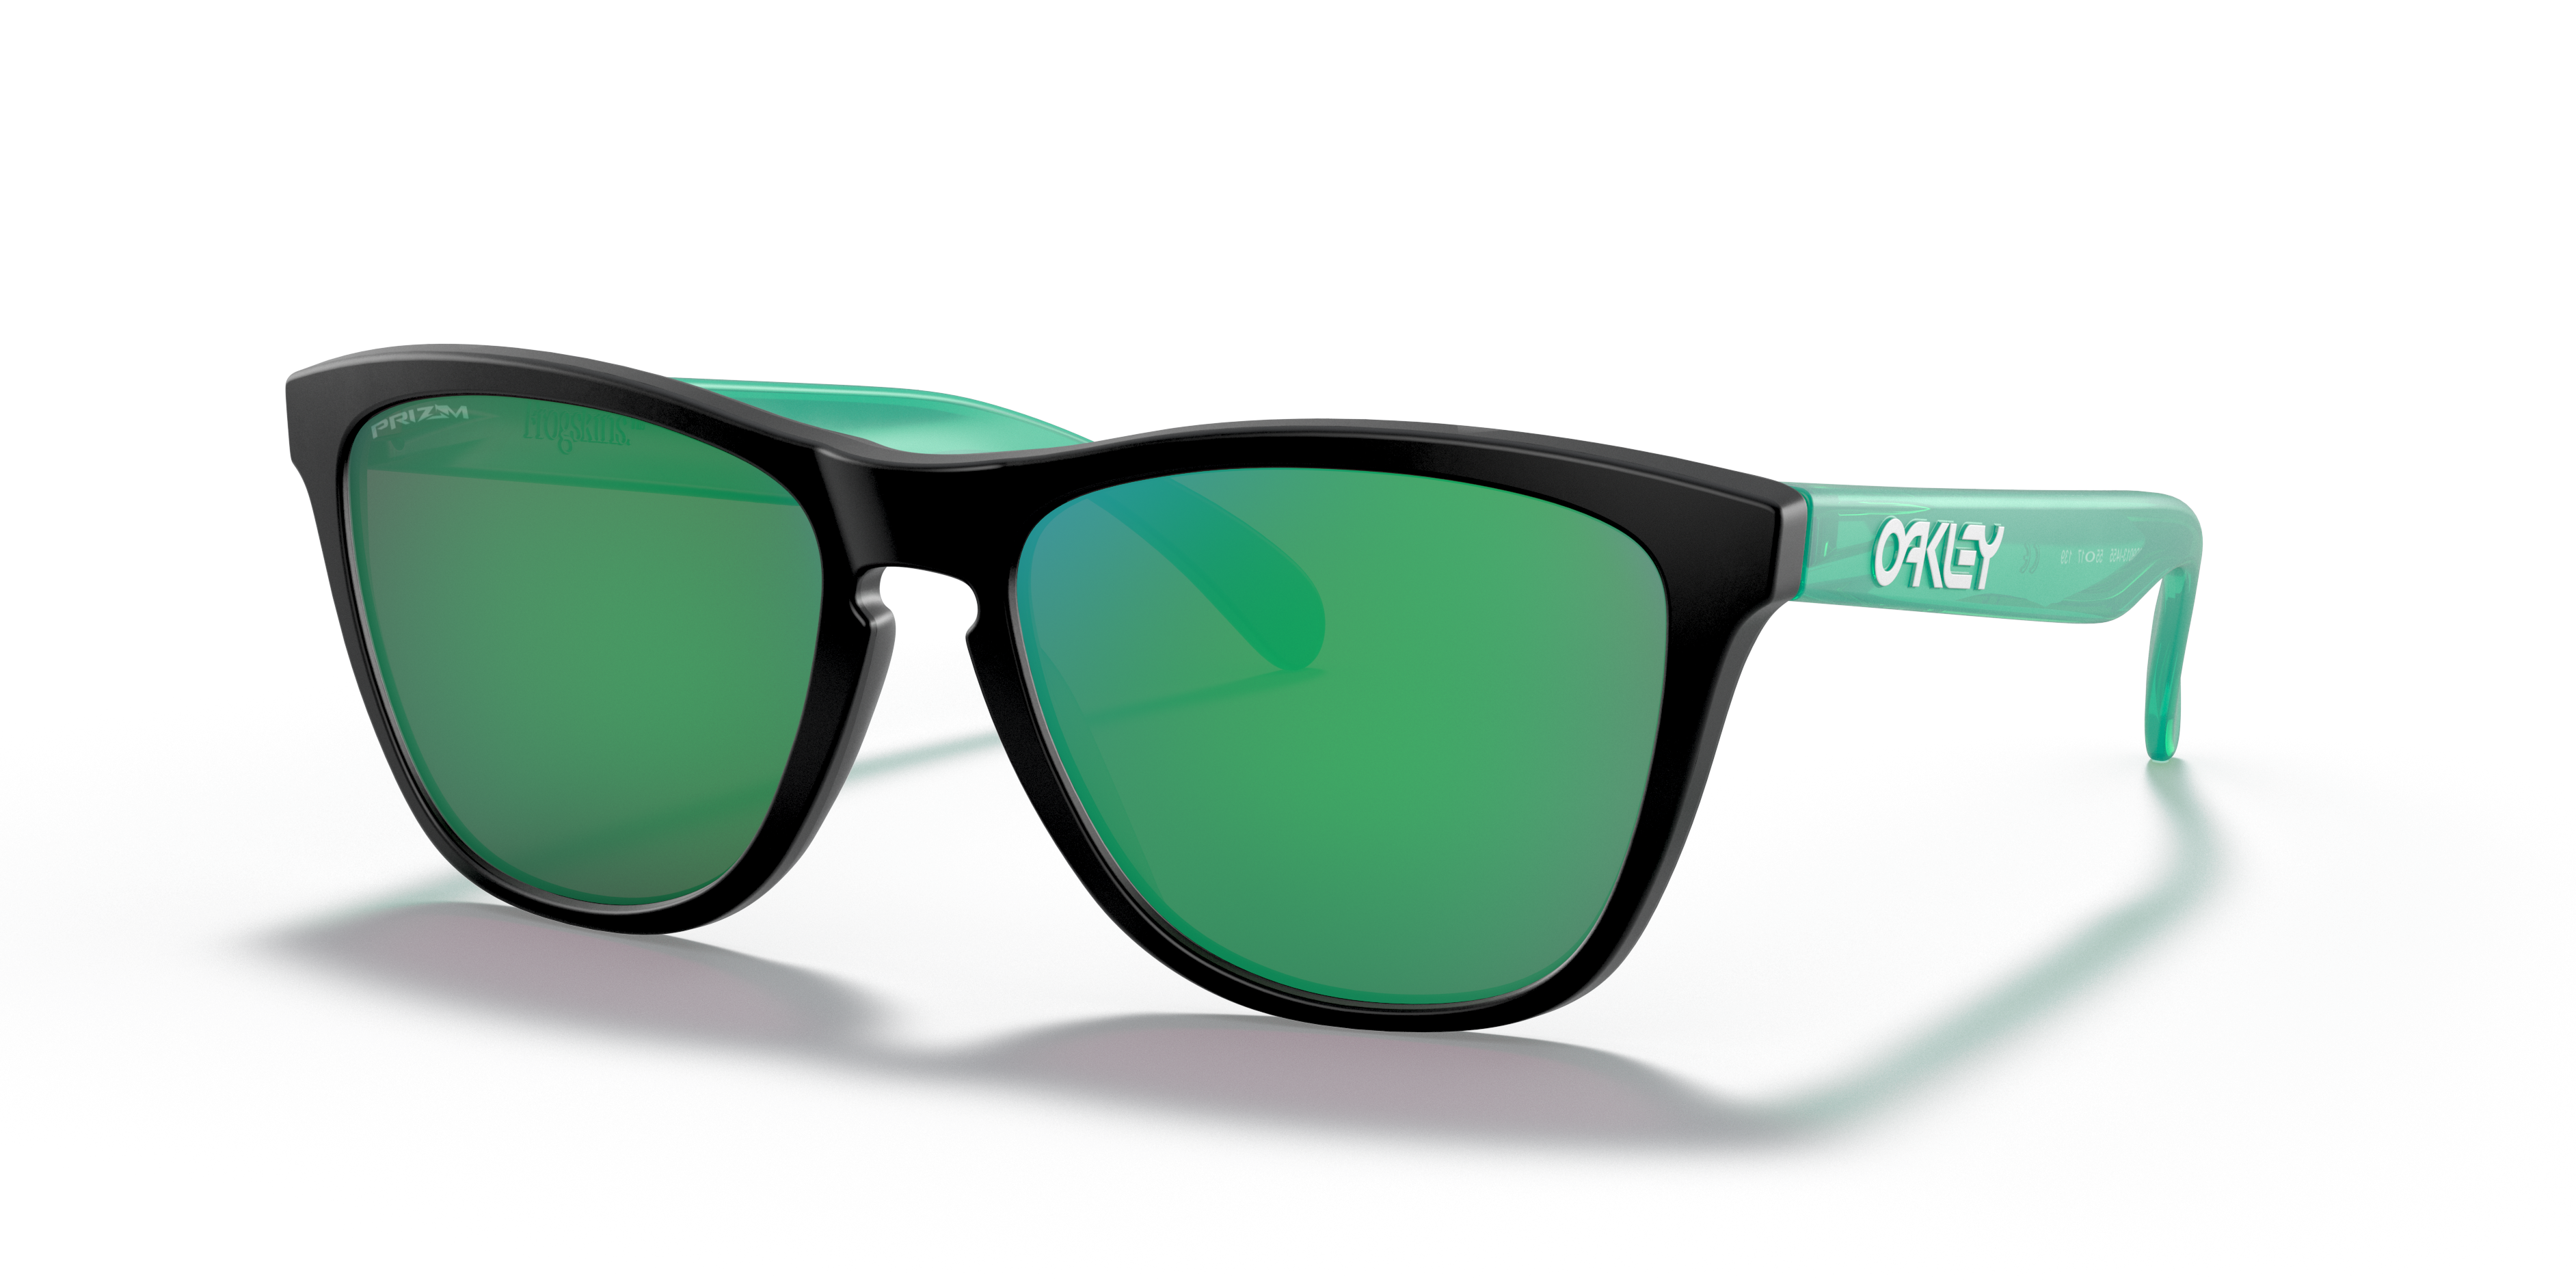 green and white oakley sunglasses